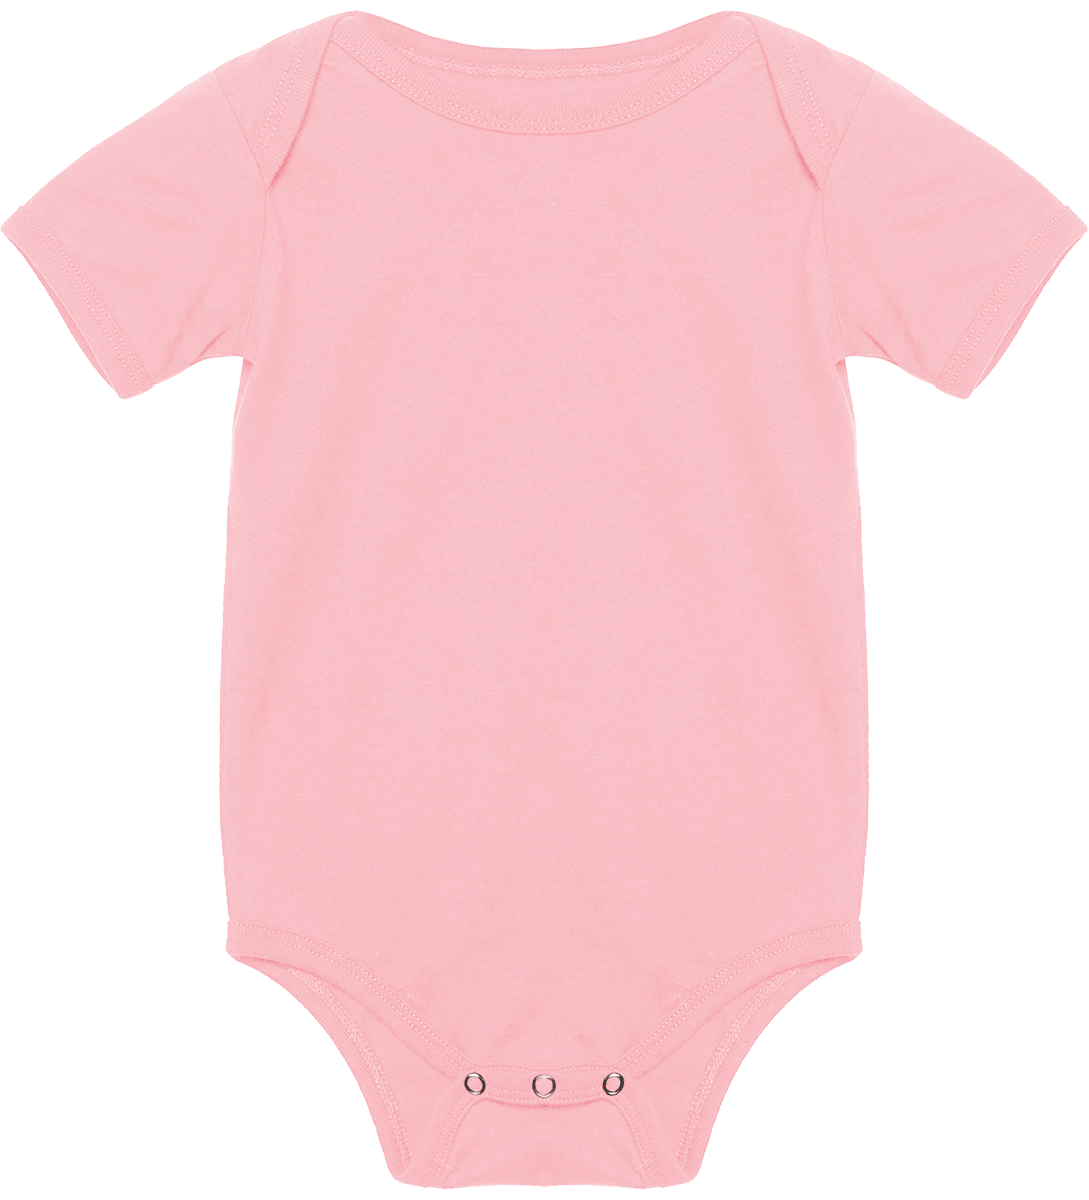 Customizable Short-Sleeved Baby Bodysuit Pink